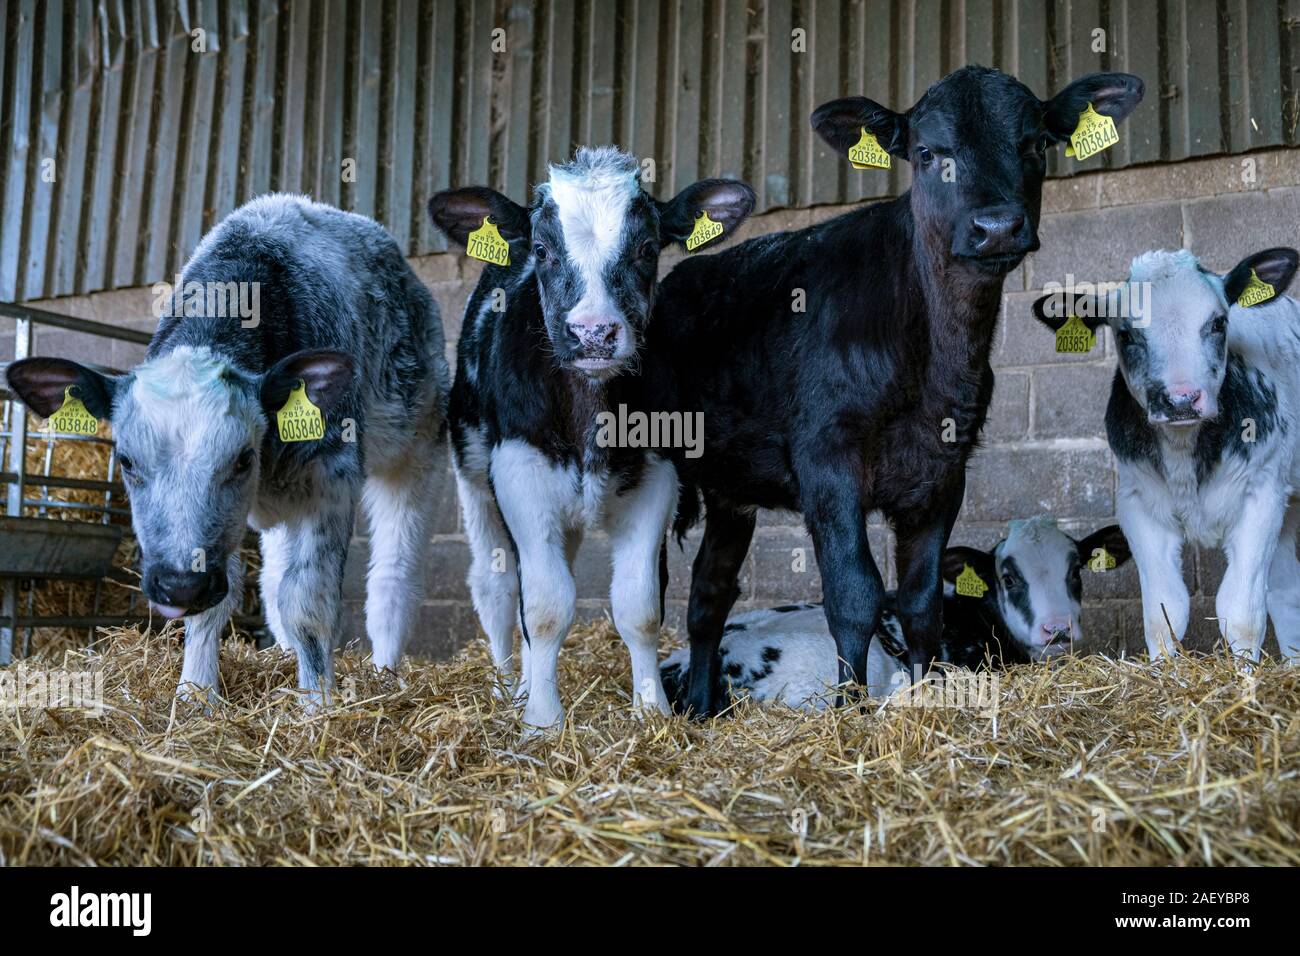 Livestock on a family farm, illustrating farming today. Stock Photo